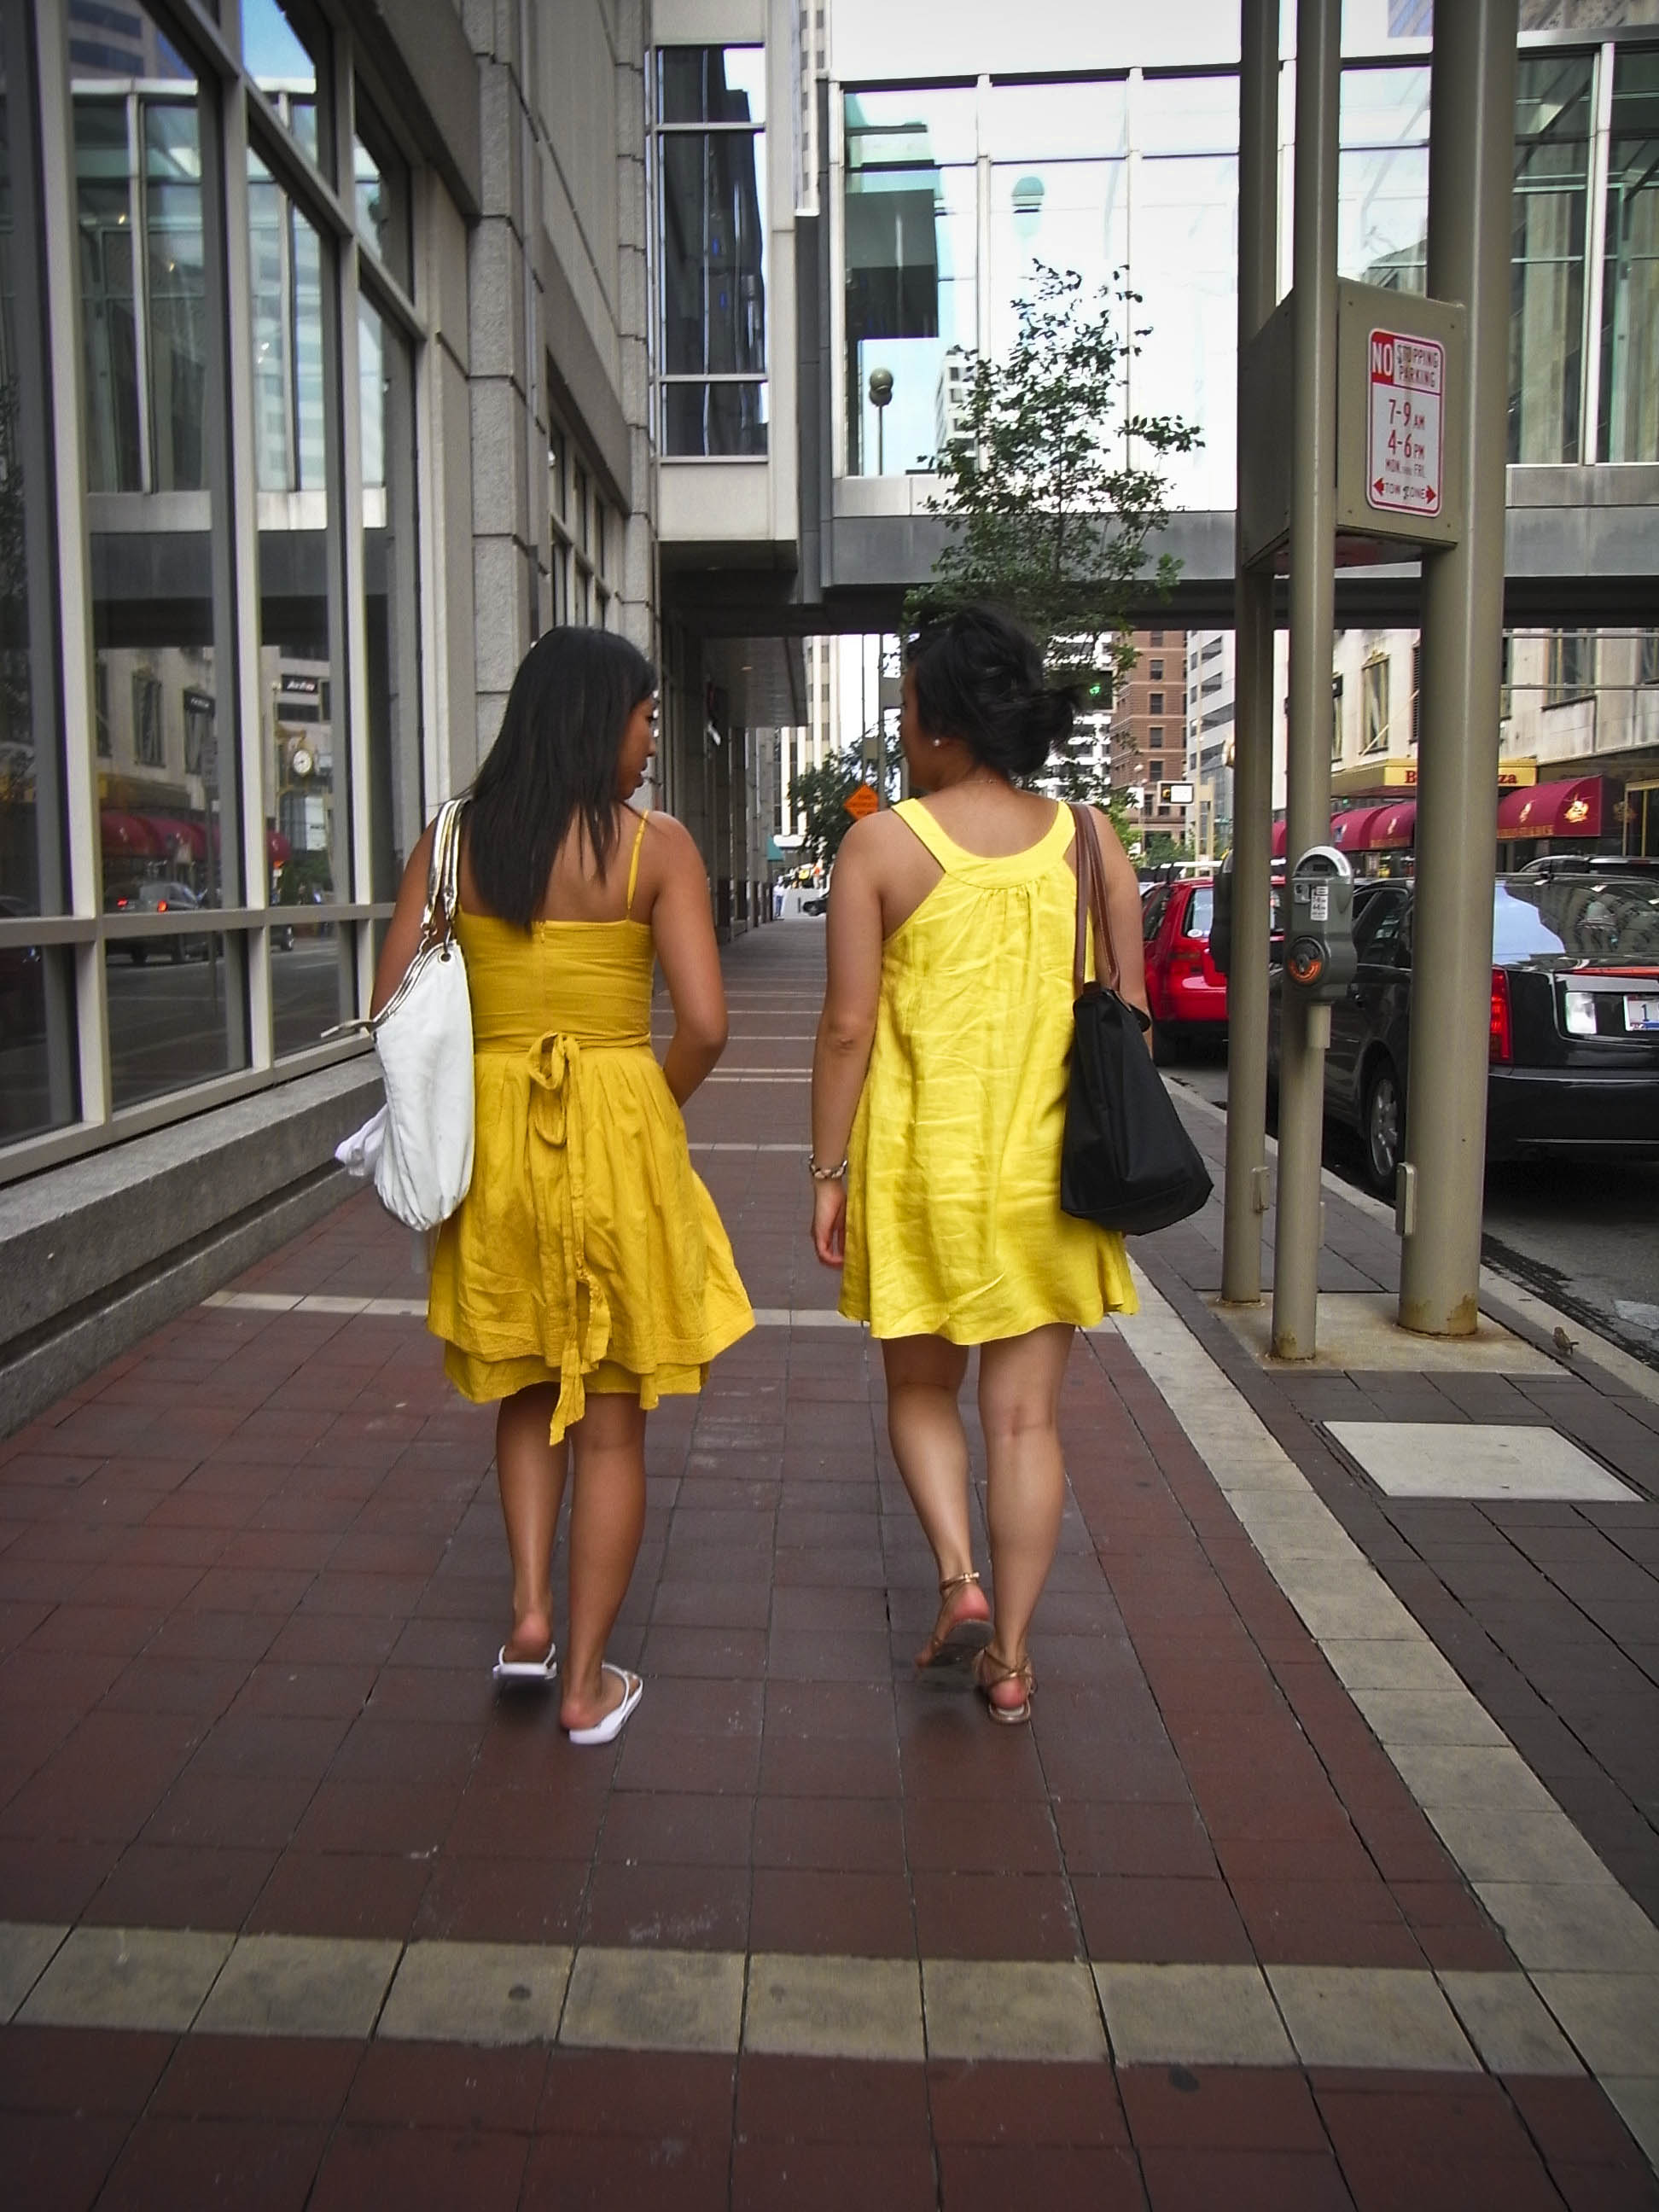 File:Girls walking in Cincinnati.jpg - Wikimedia Commons